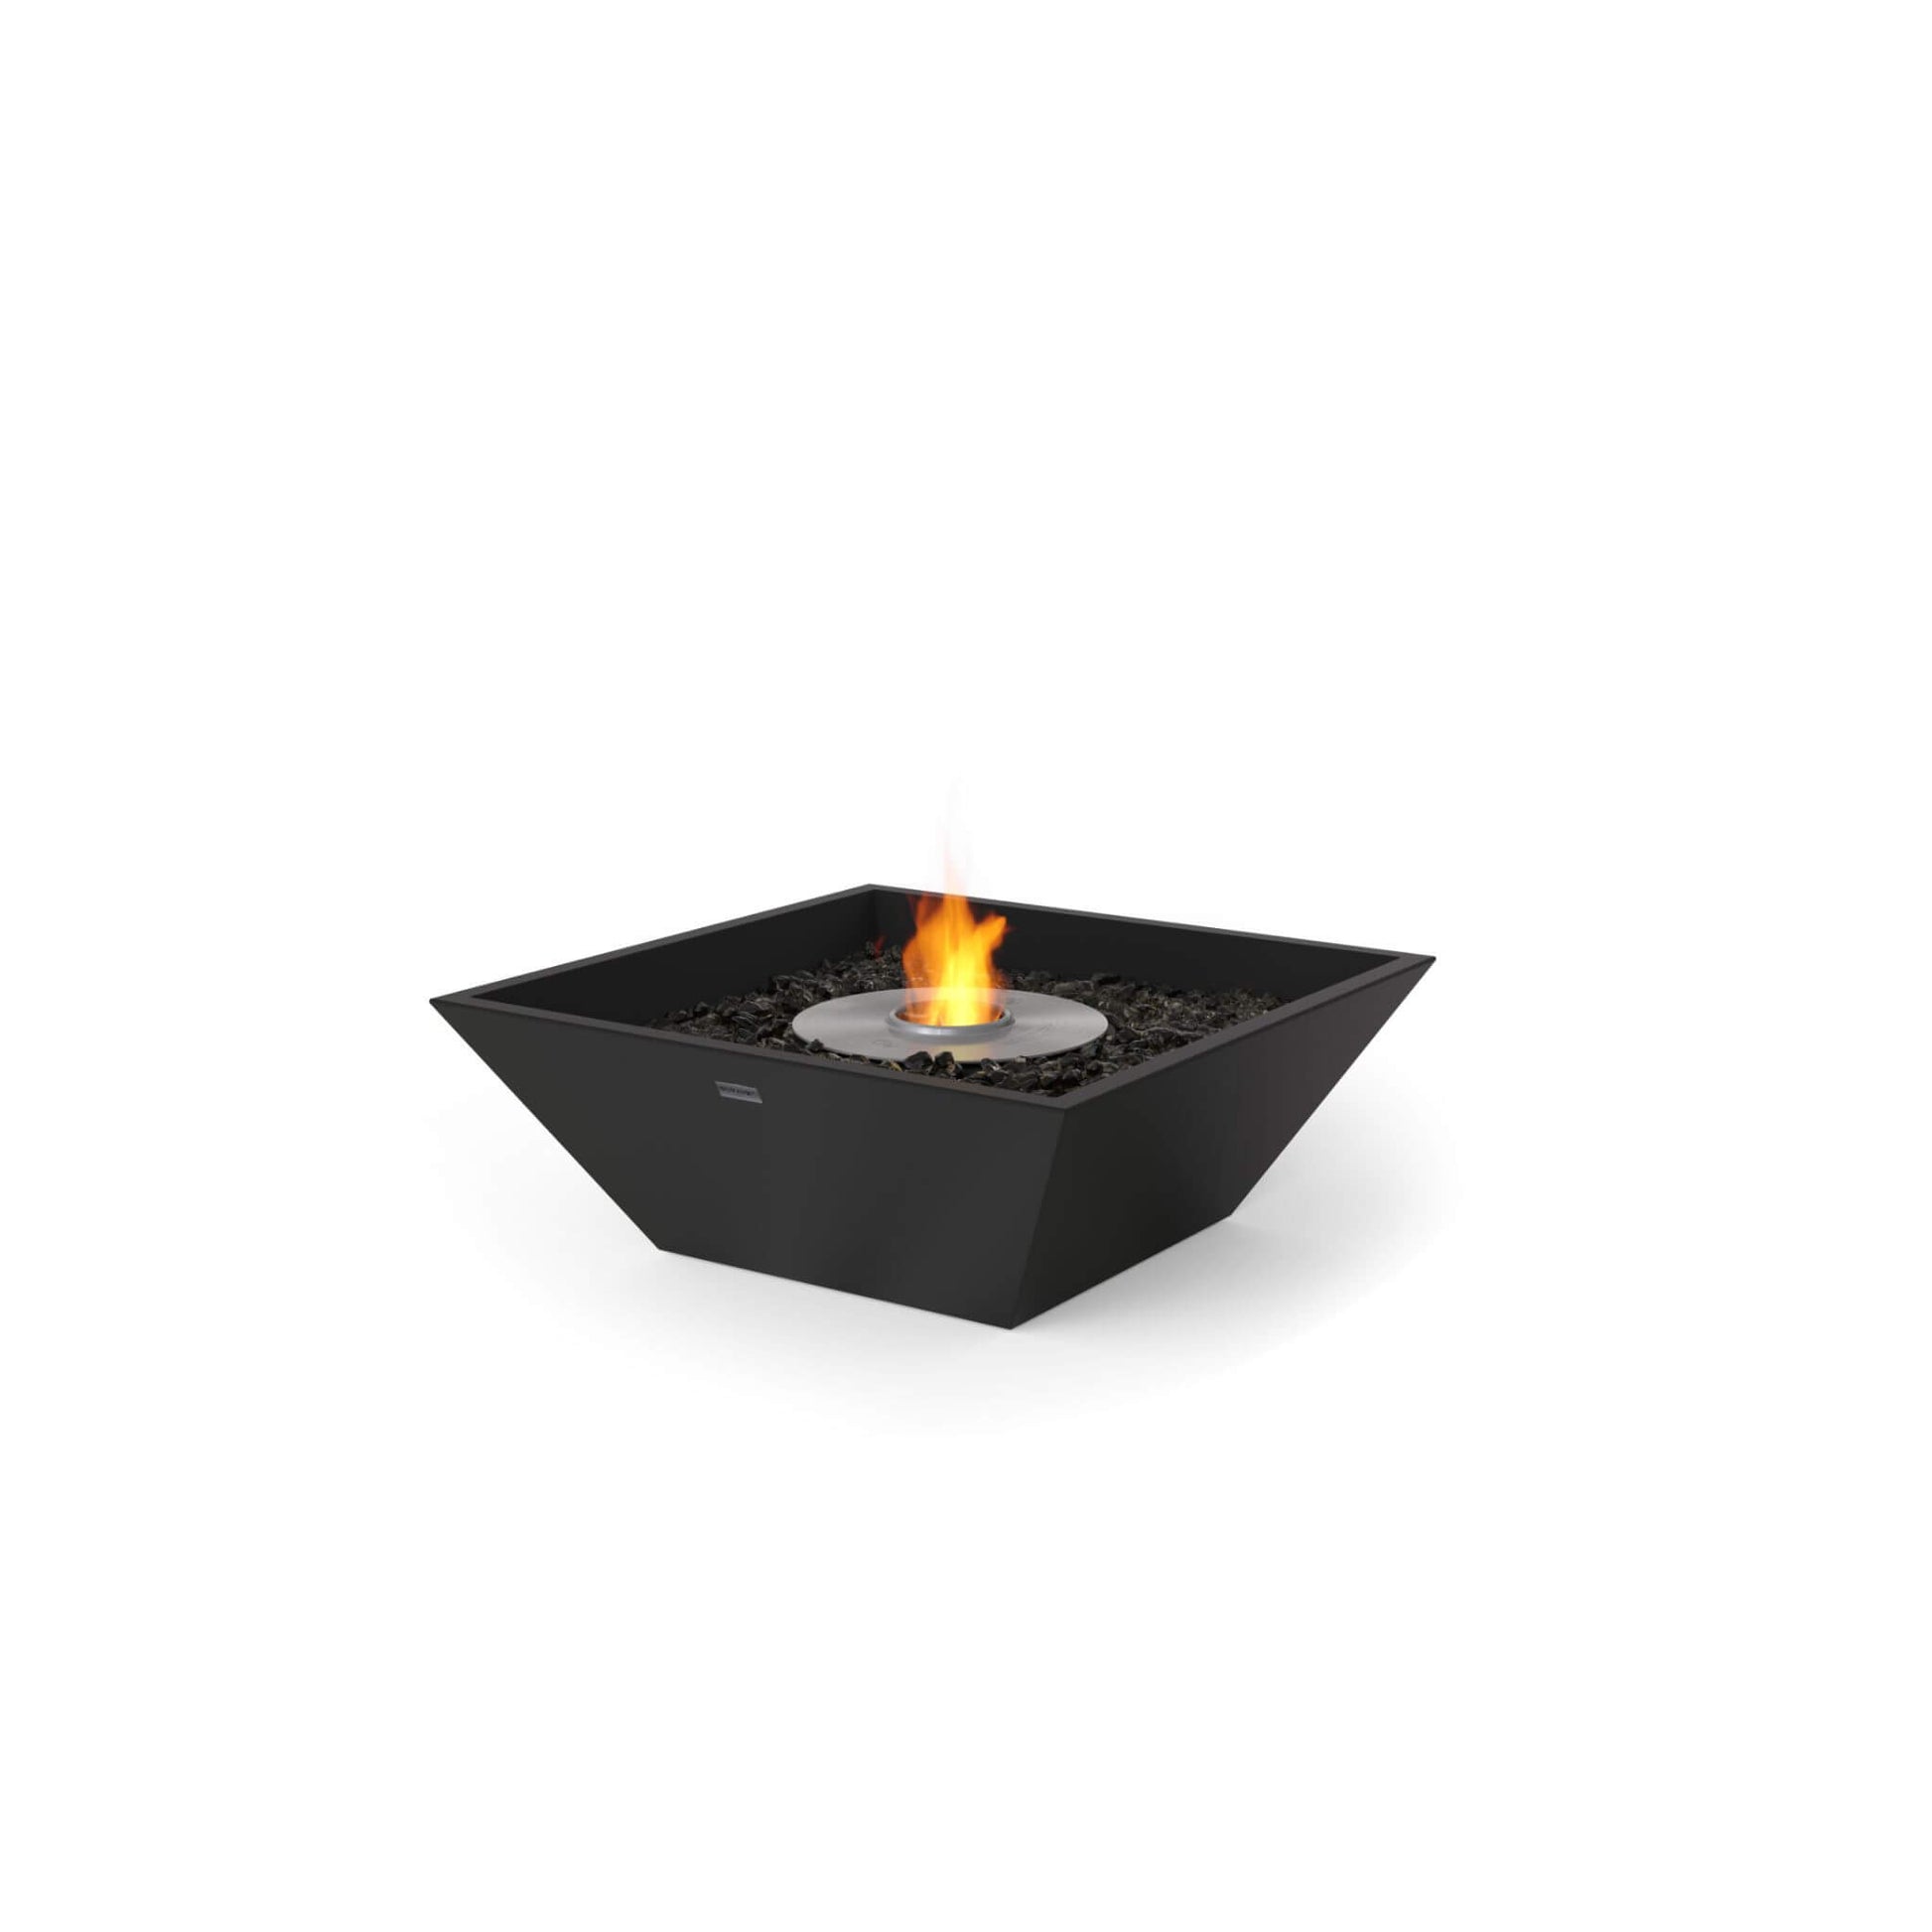 Ecosmart Fire Nova 600 bioethanol garden fire pit square bowl in concrete black with stainless steel ethanol burner